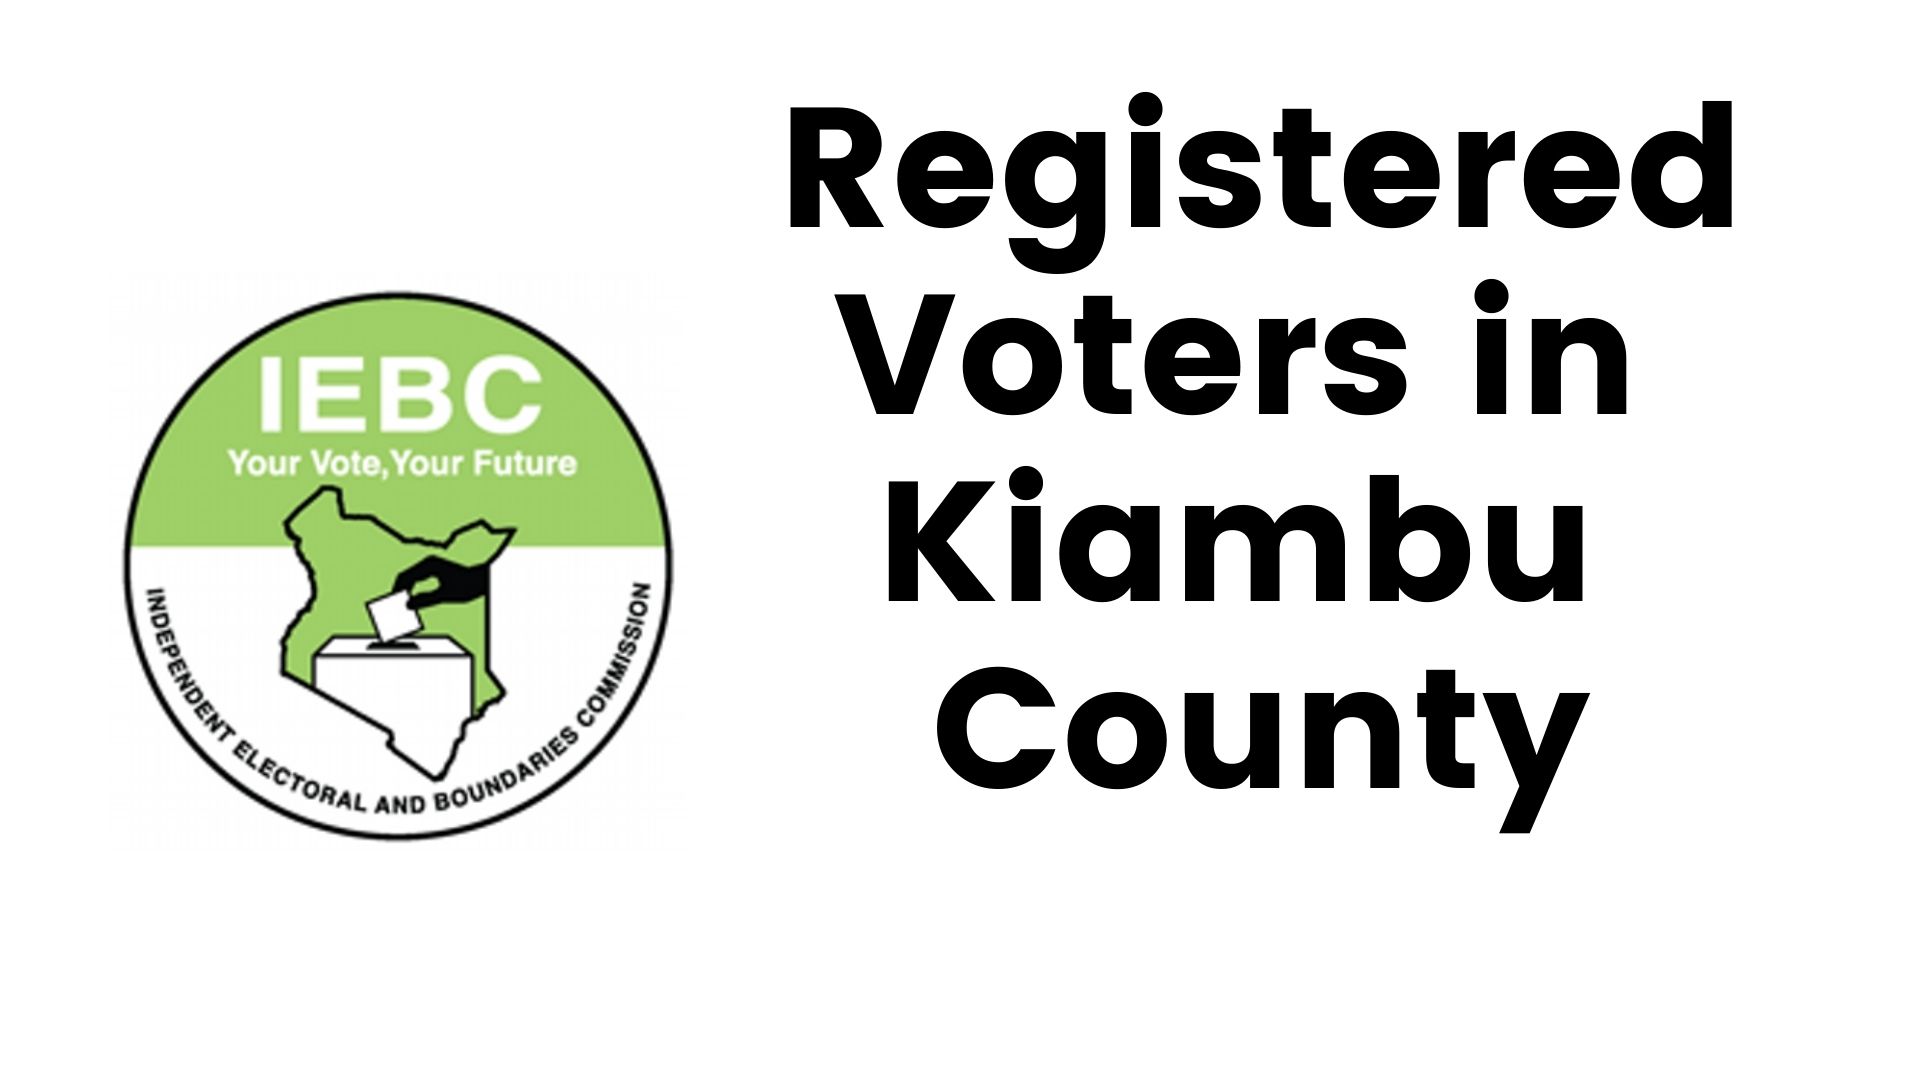 IEBC Kiambu County Registered Voters